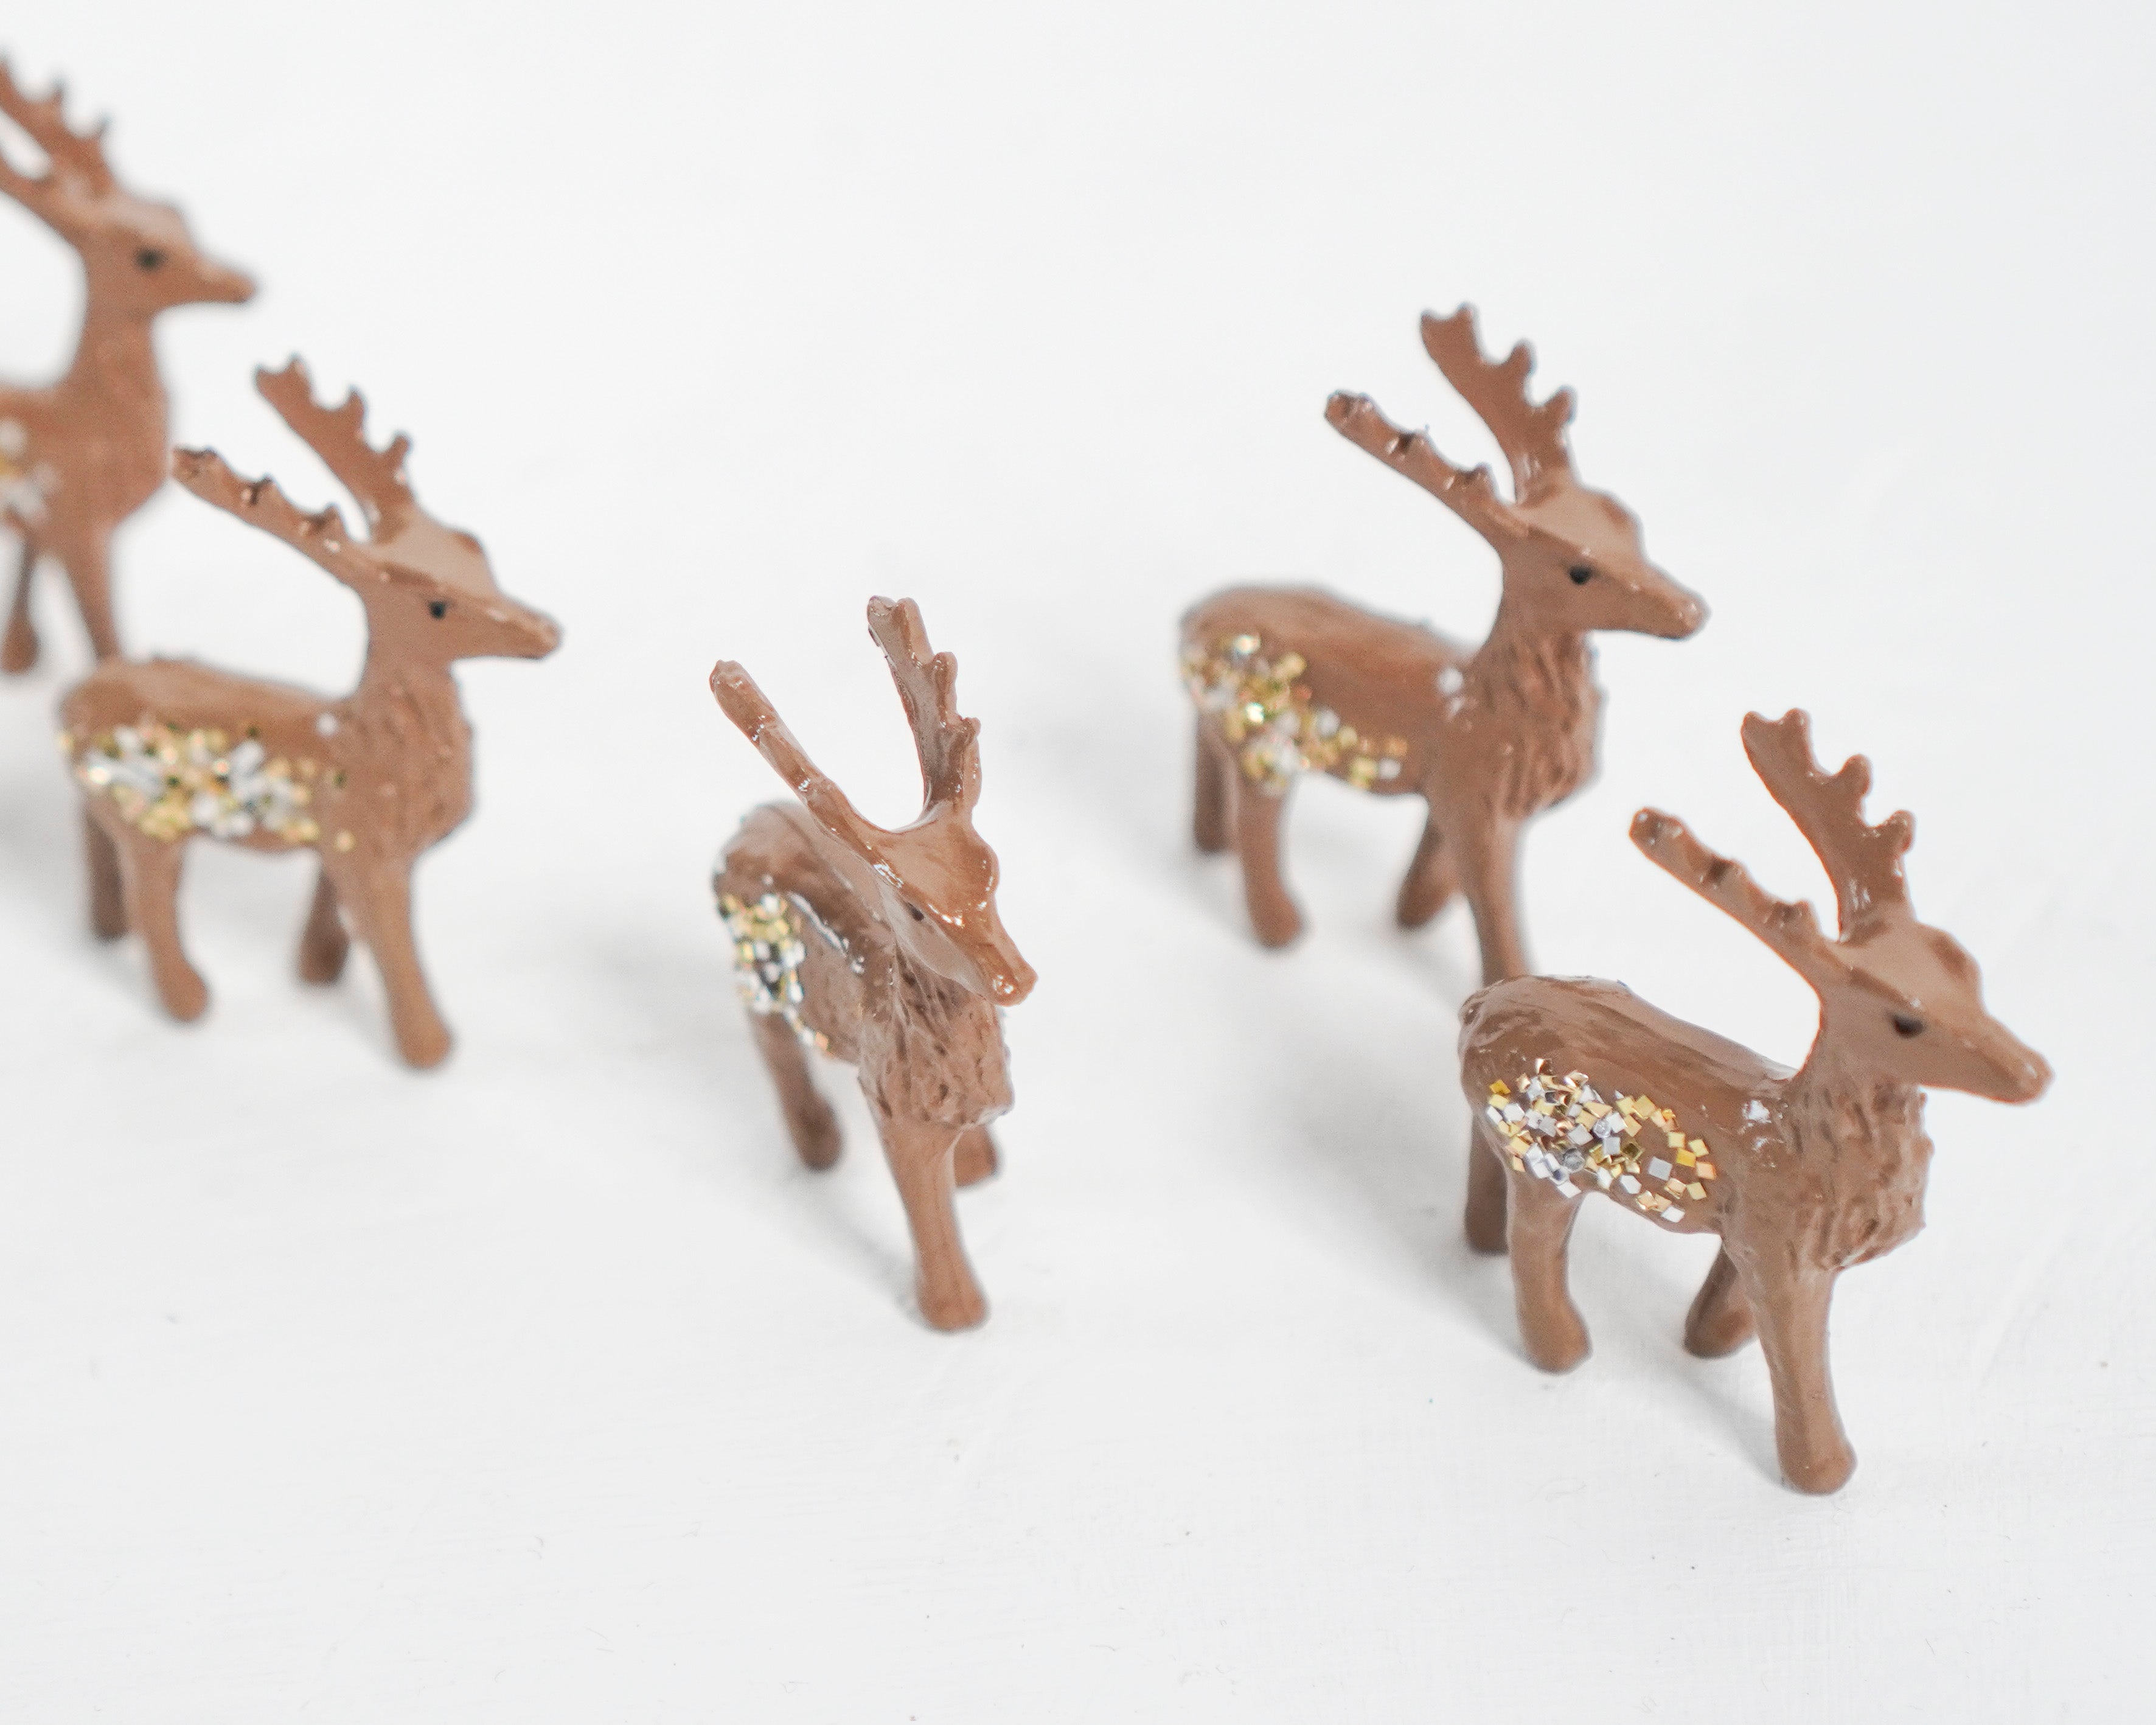 Miniature Deer - 6 Brown Plastic Reindeer Figurines with Glitter